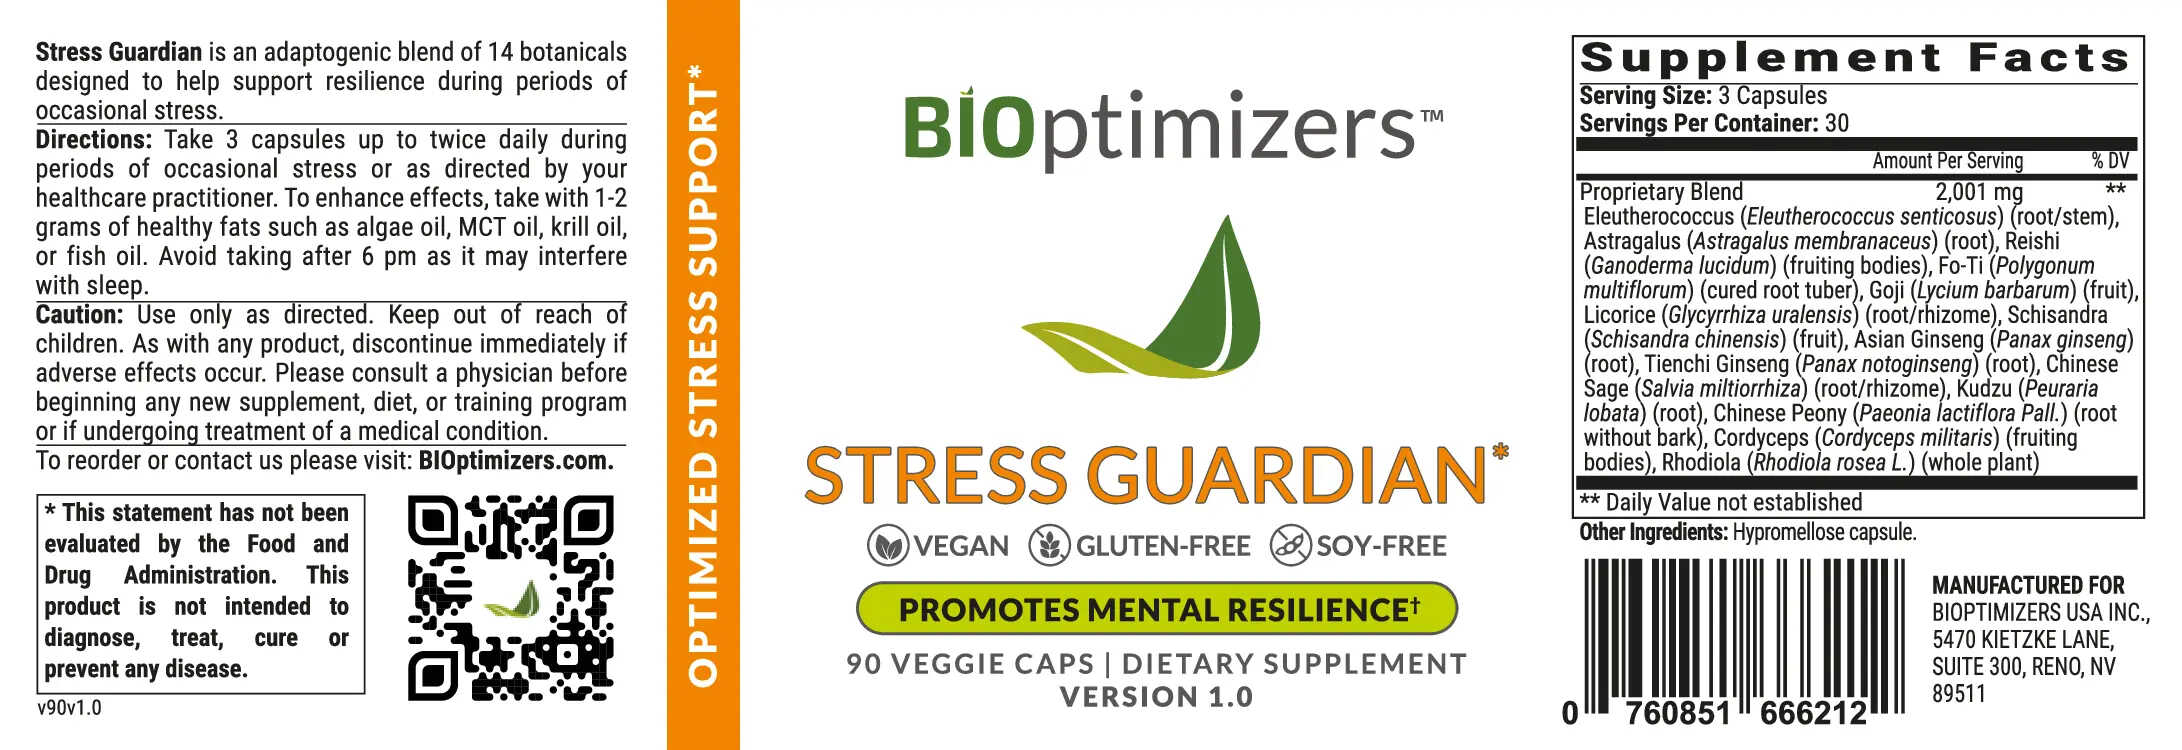 stress-guardian-label_optimized